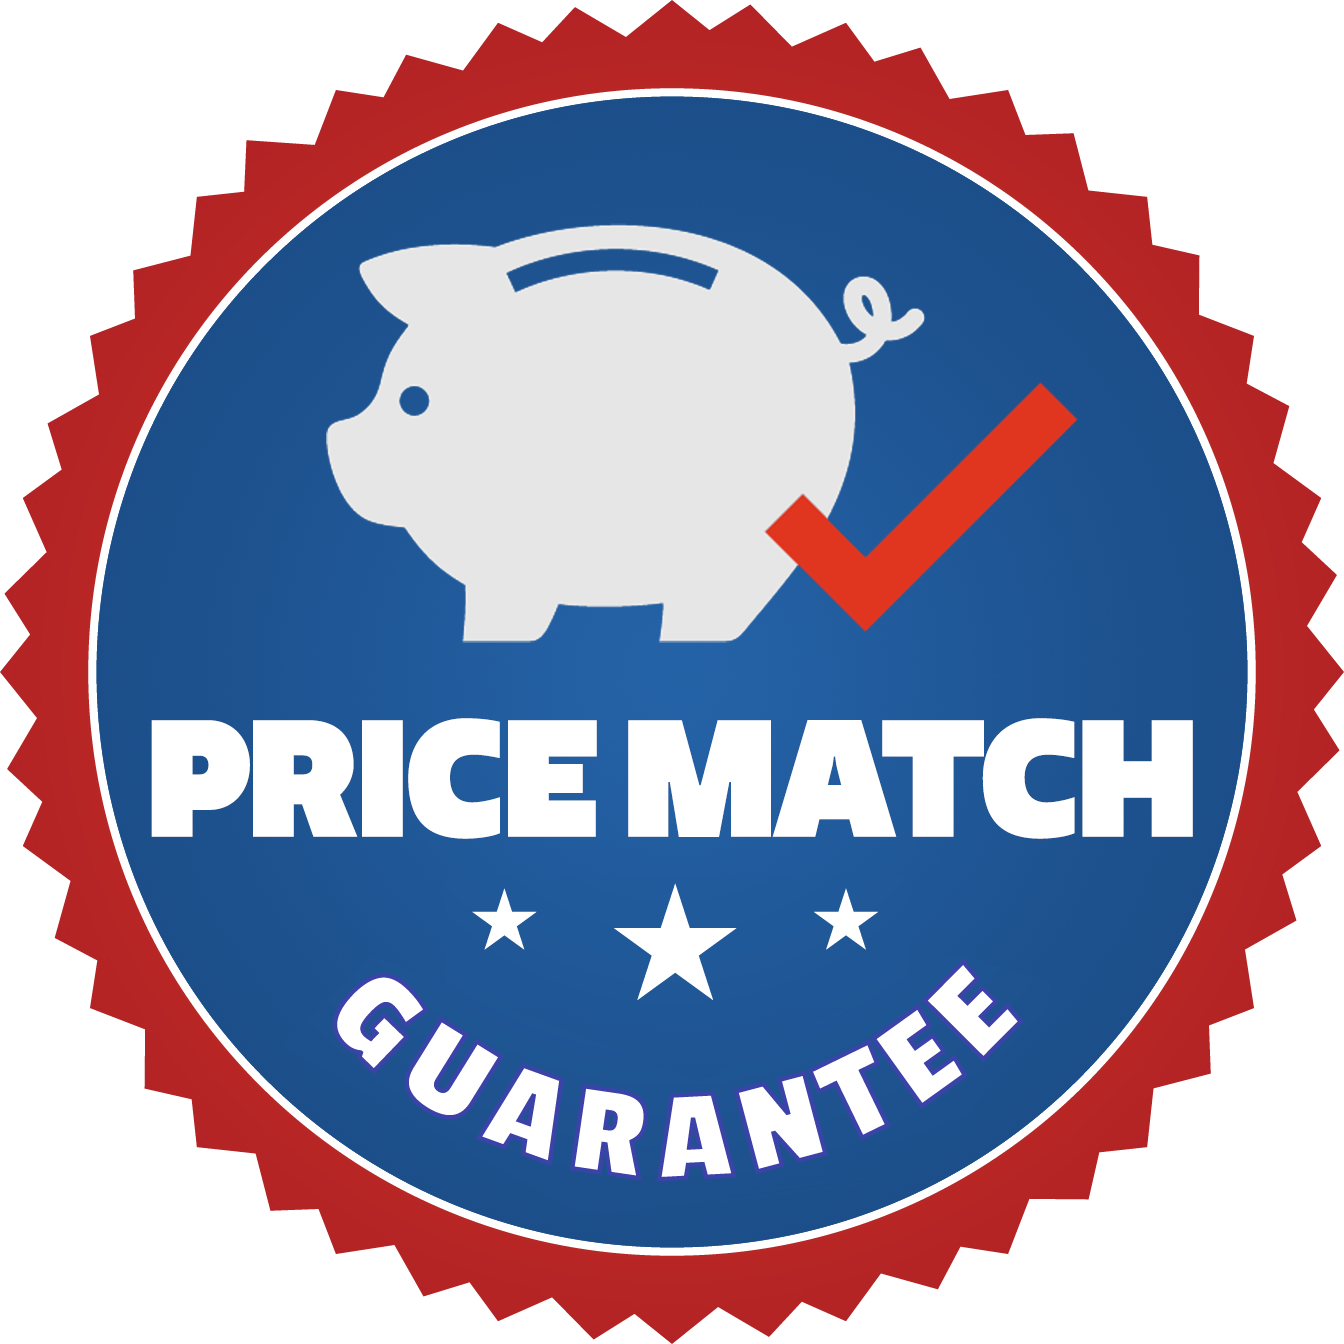 Price Match Guarantee badge